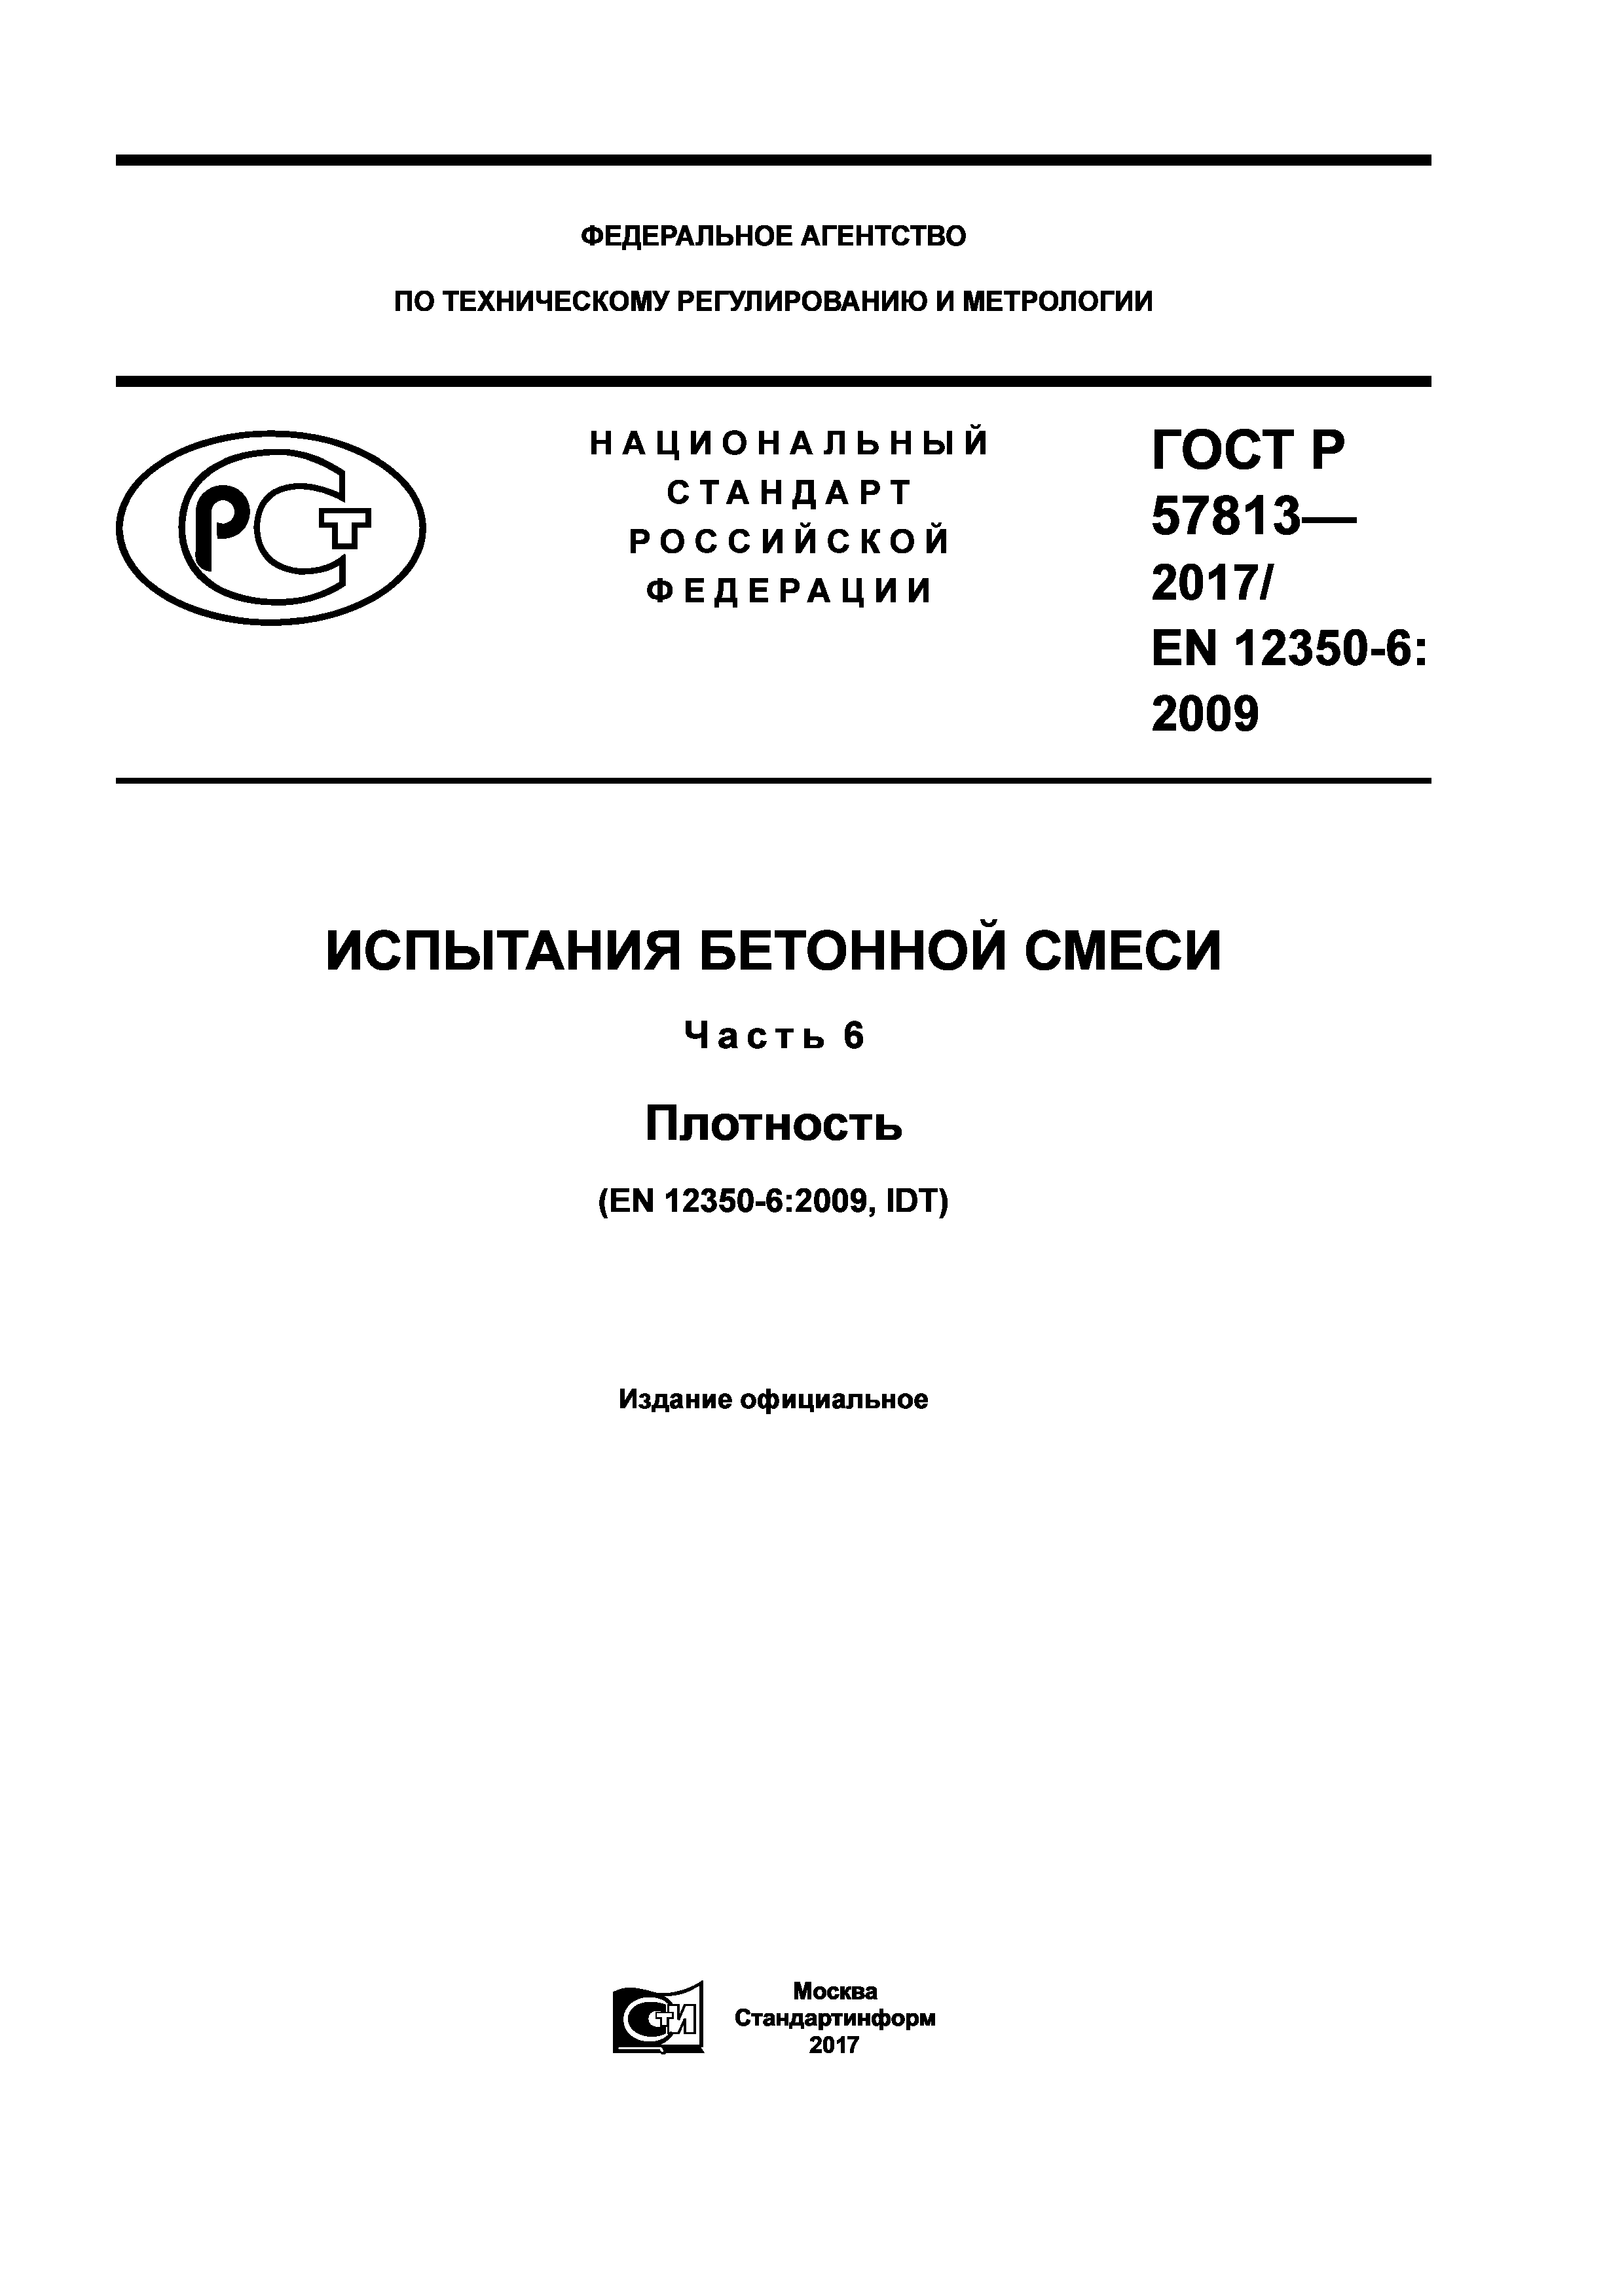 ГОСТ Р 57813-2017